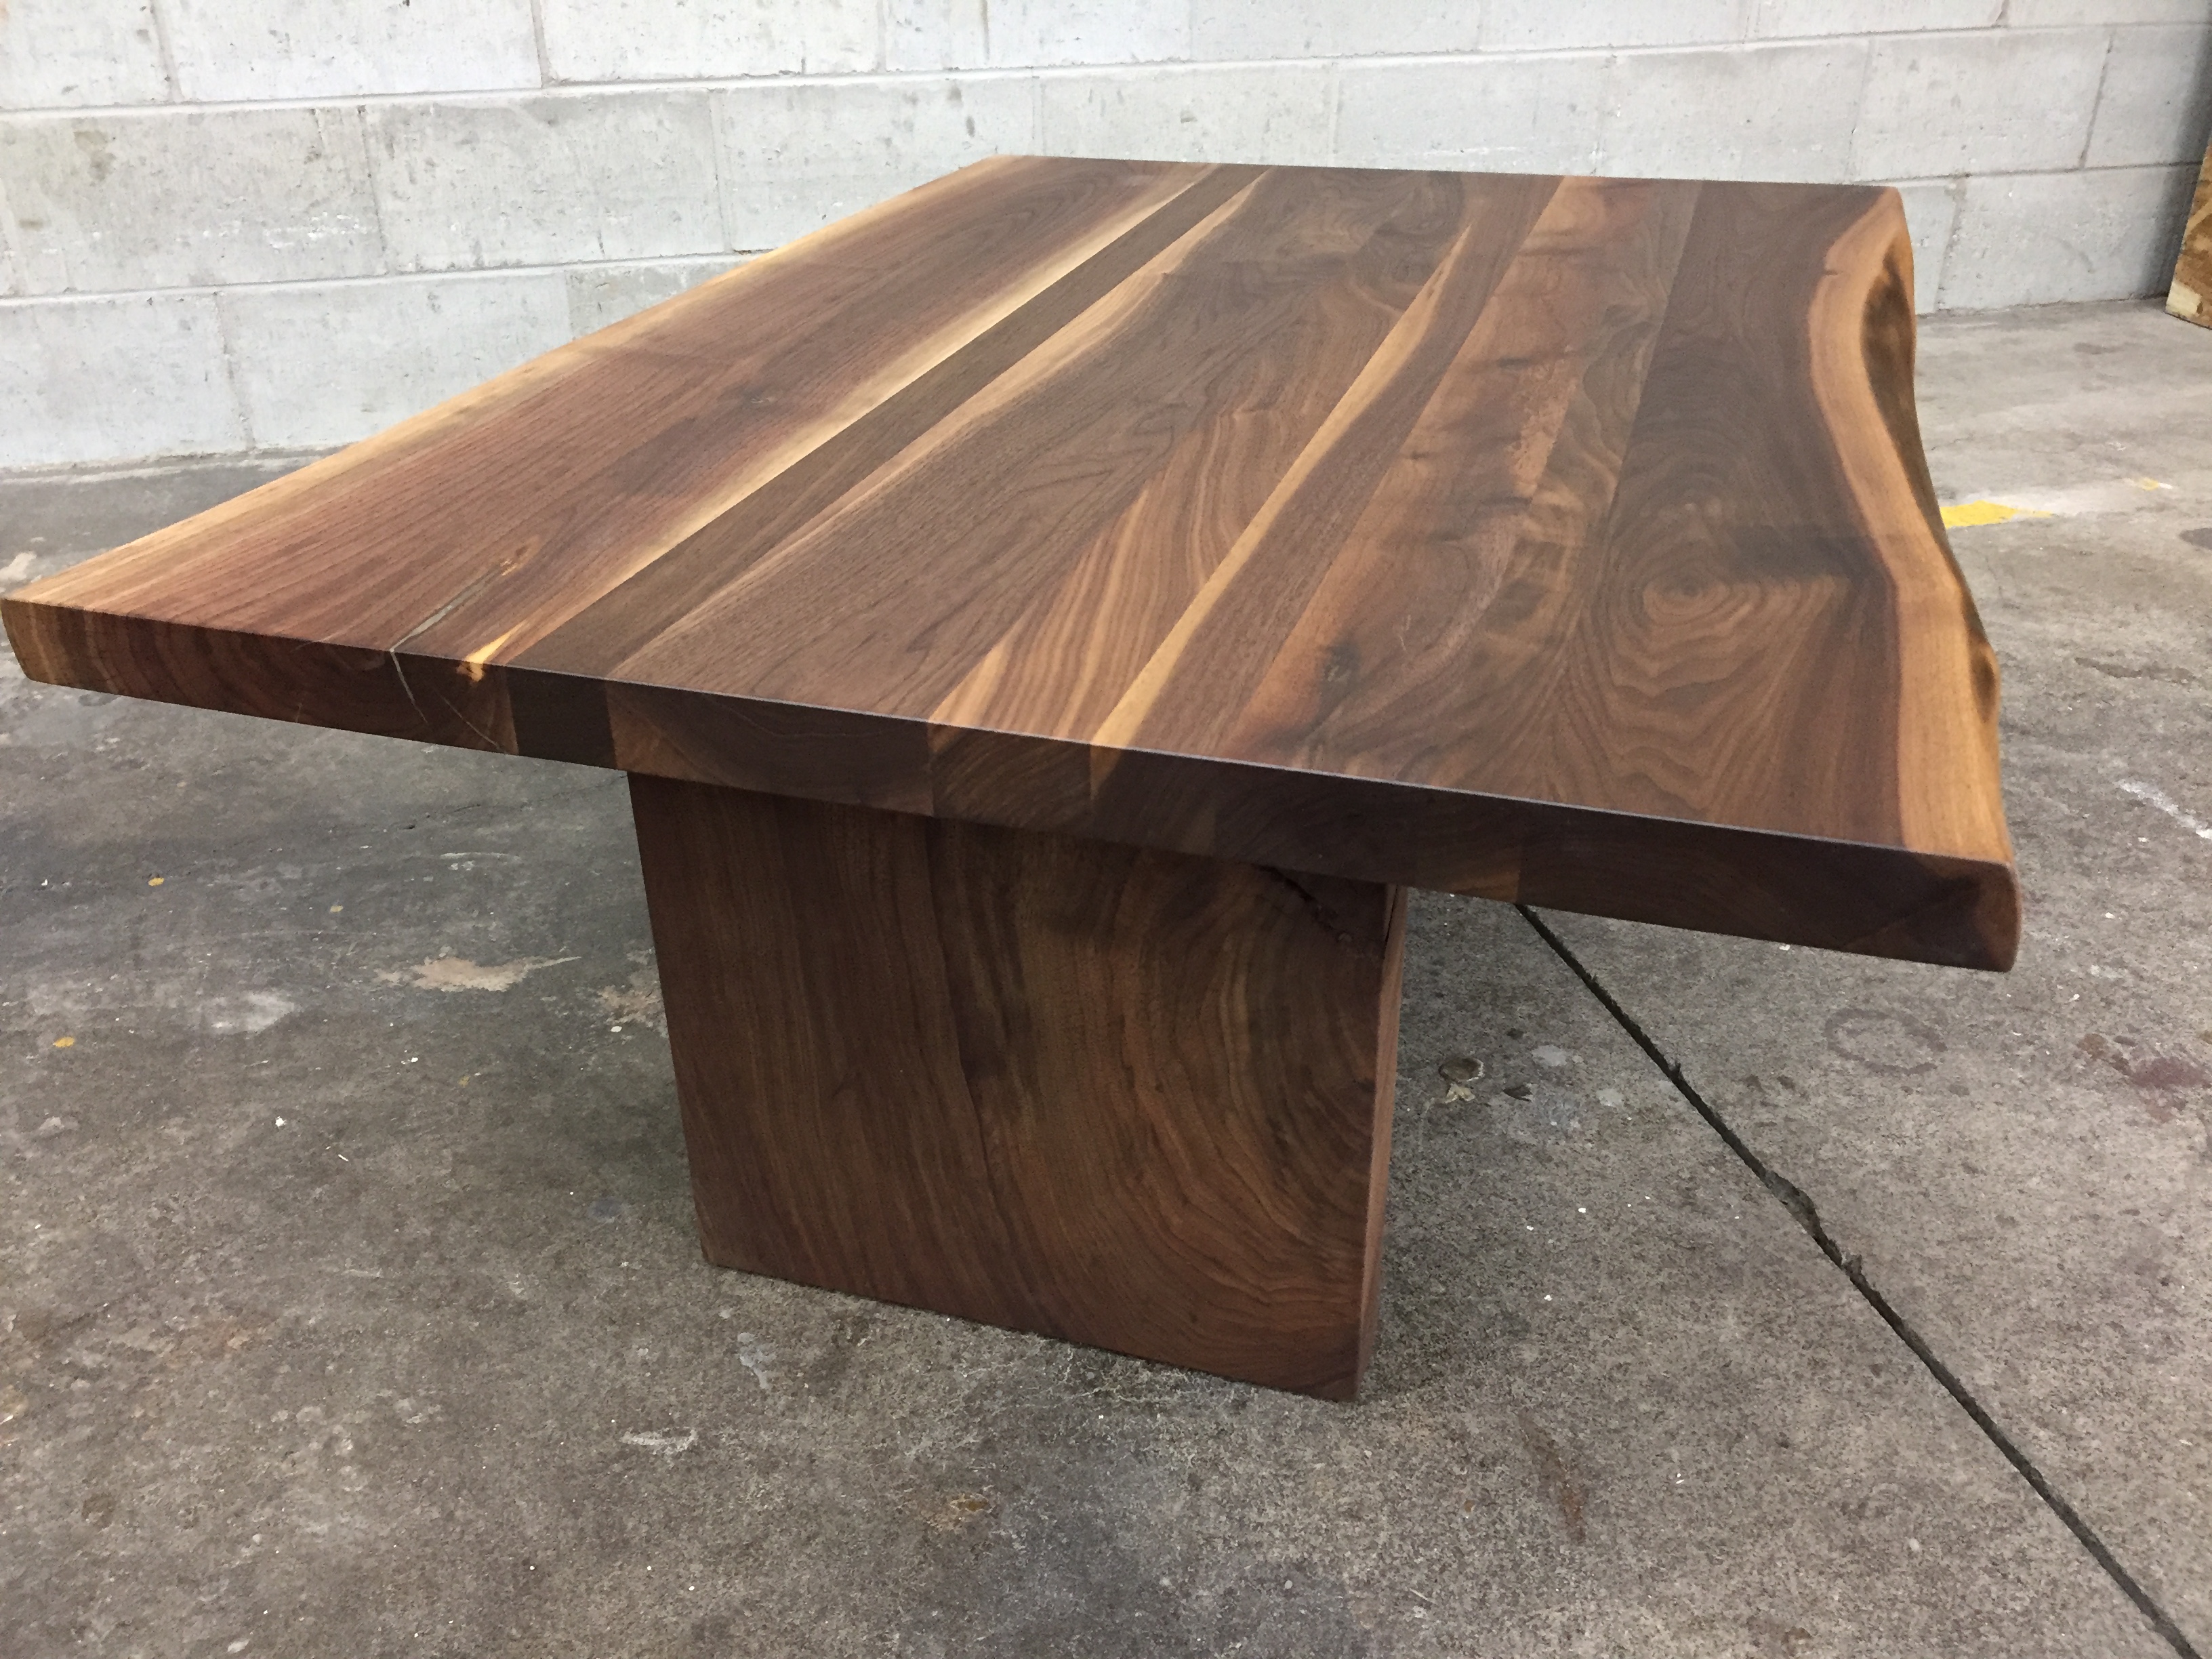 How To Make A Live Edge Coffee Table Live Edge Wood Live Edge Table